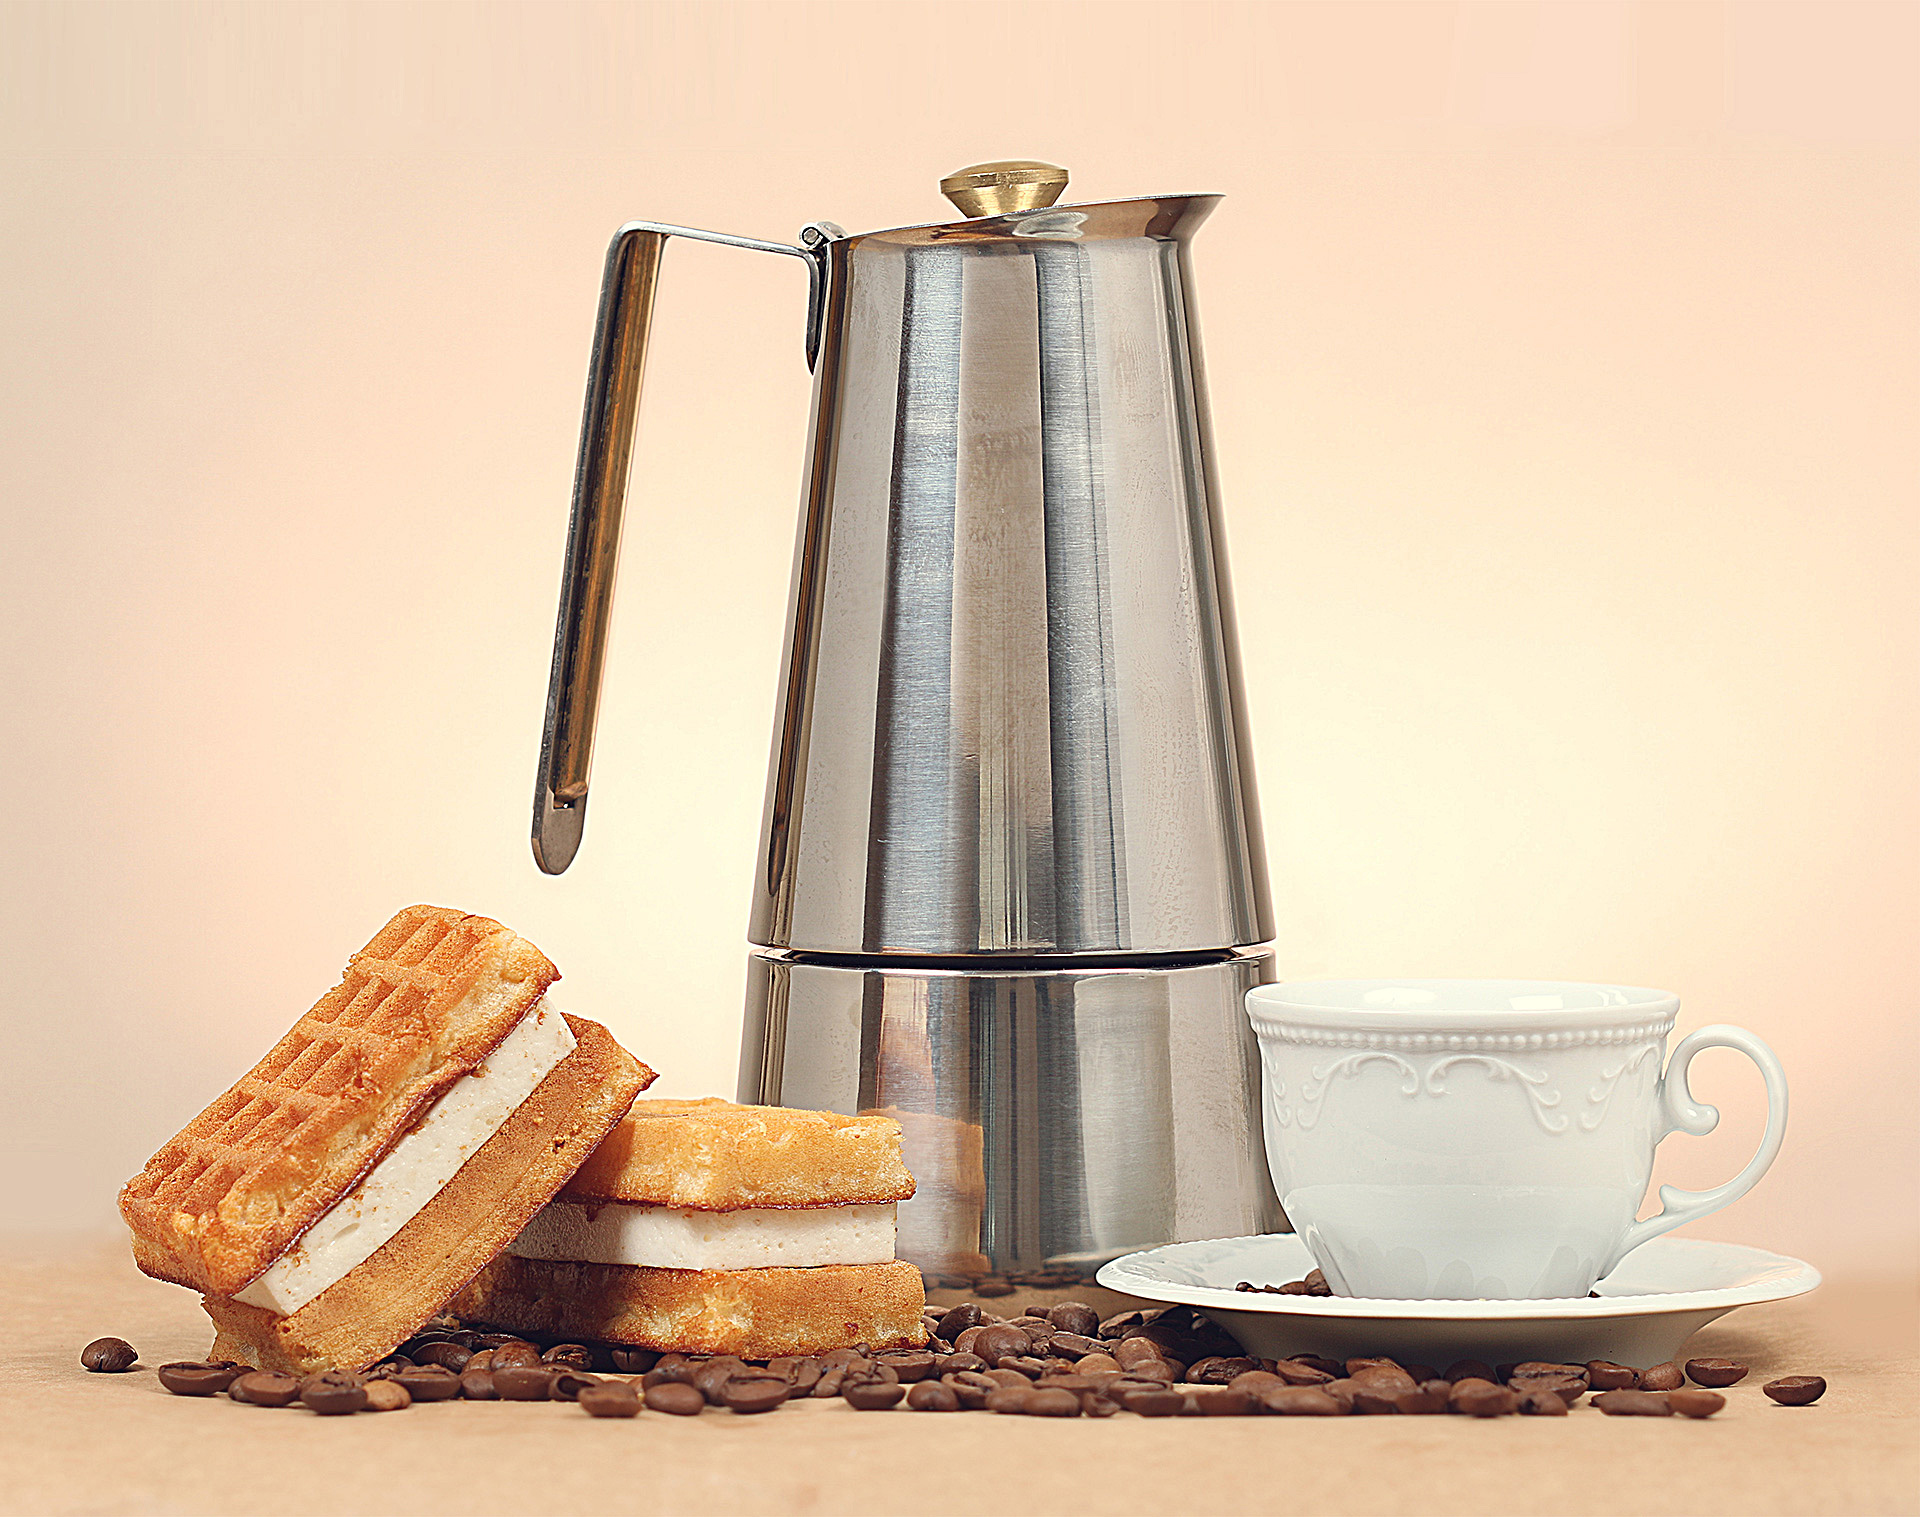 Рекламное фото: «Натюрморт с кофе и венскими вавлями